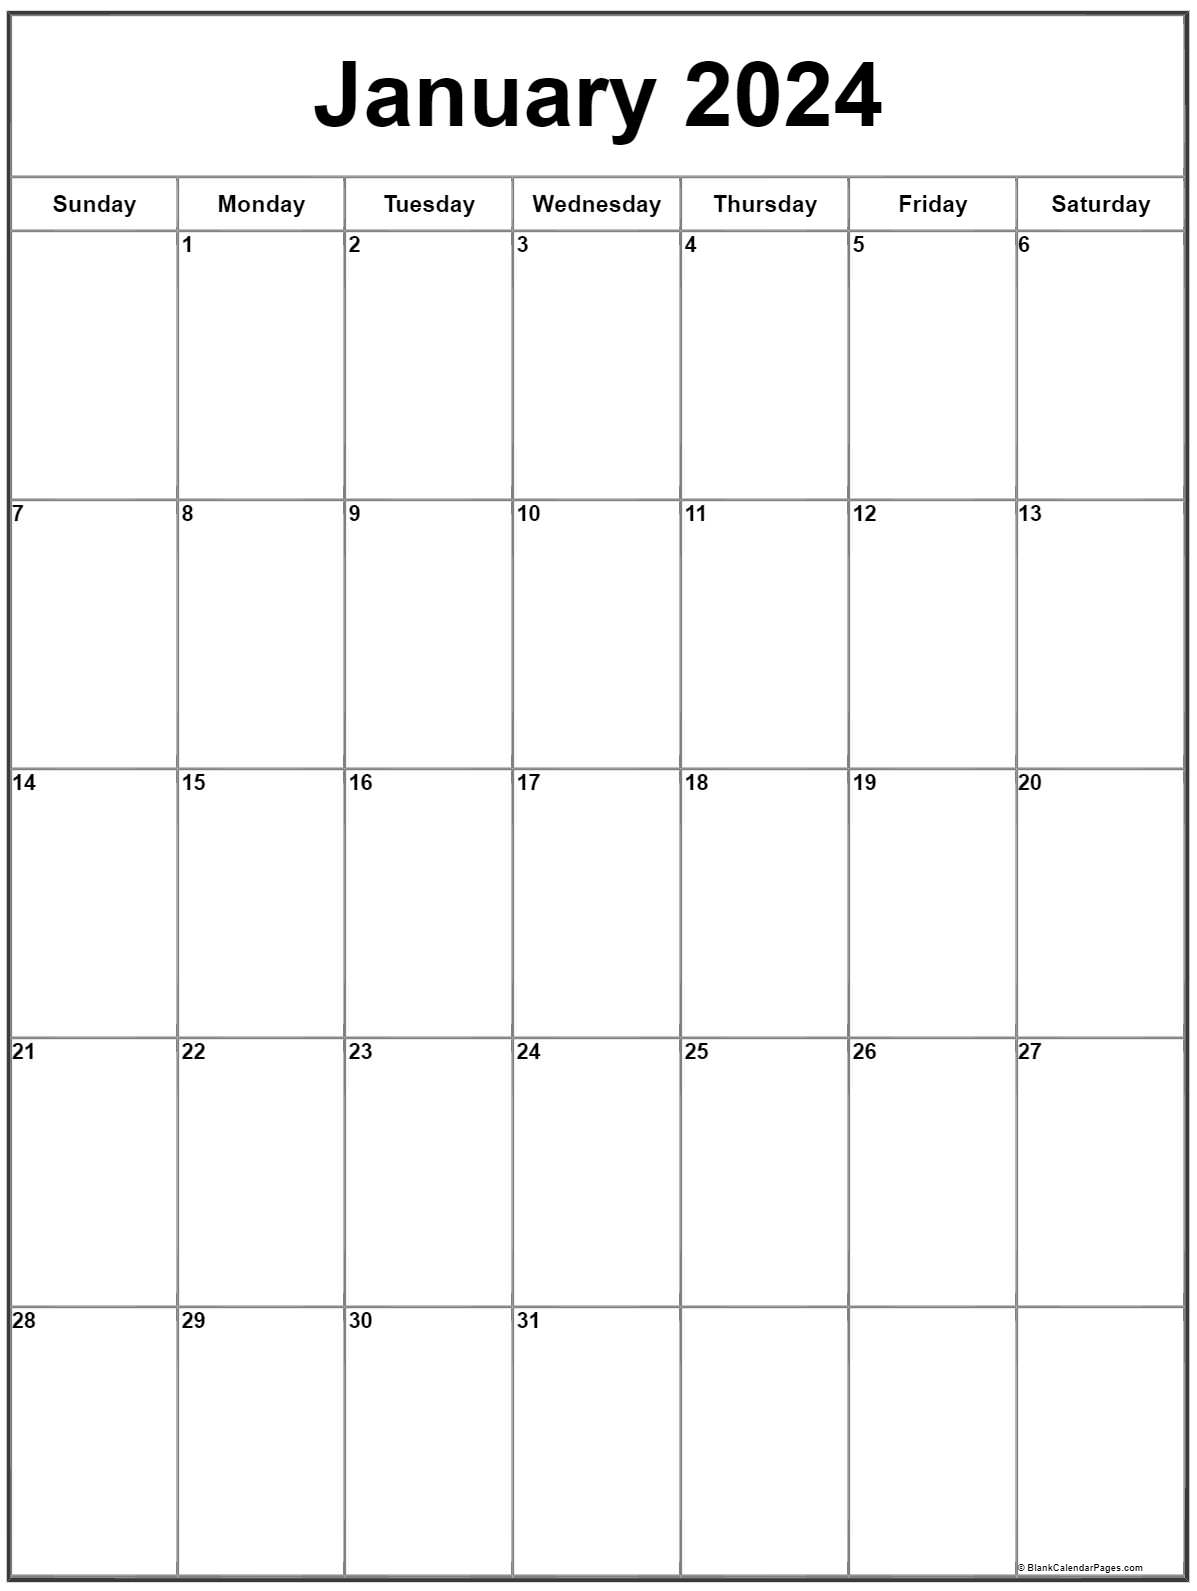 Jan 2024 Calendar Advancefiber in